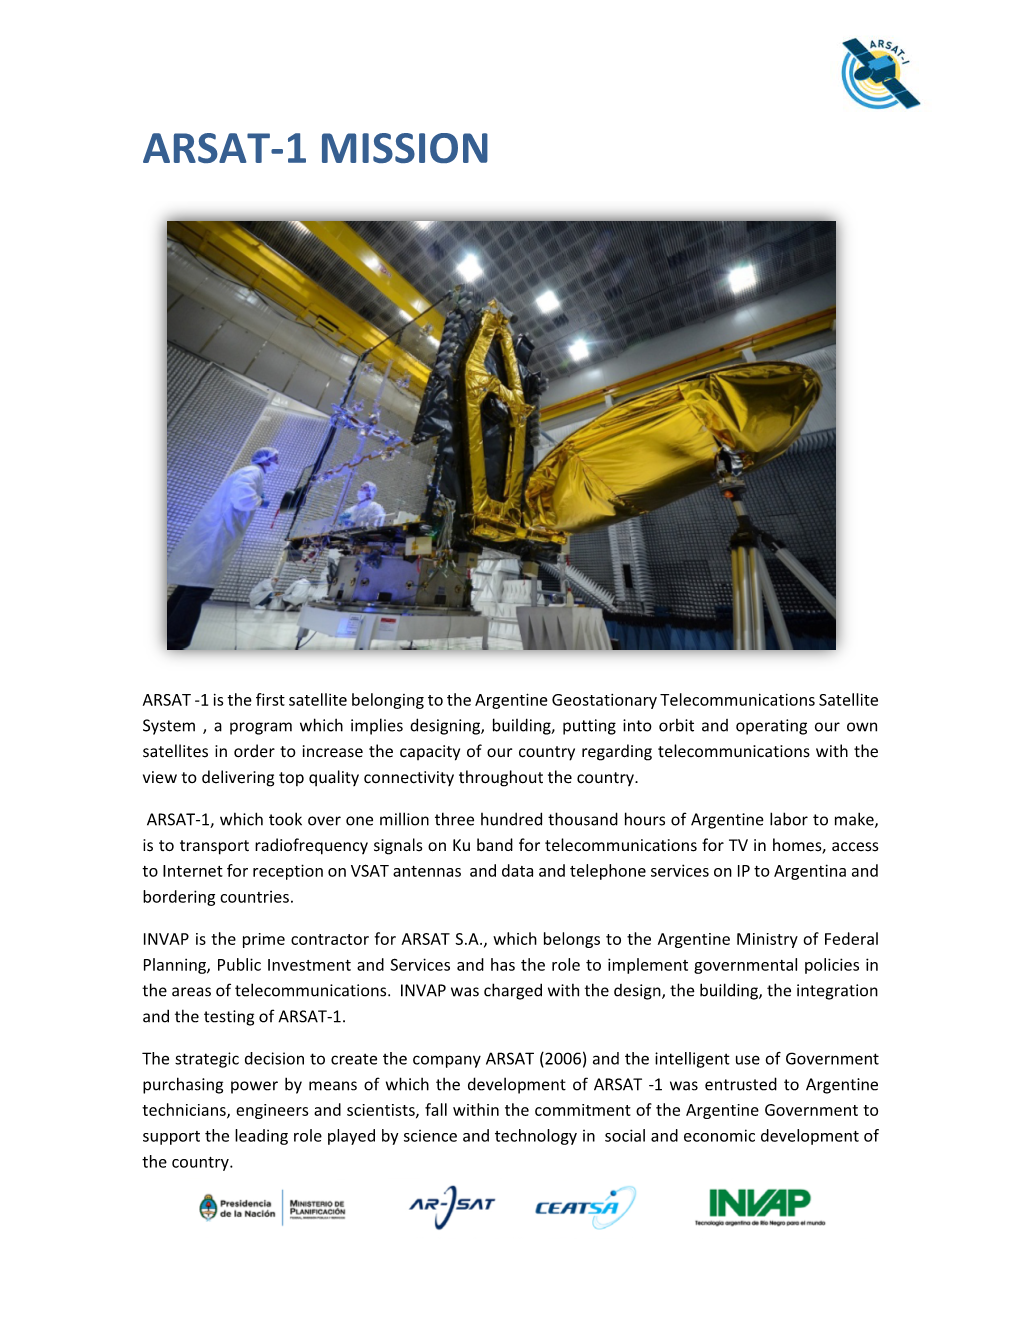 Arsat-1 Mission Overview